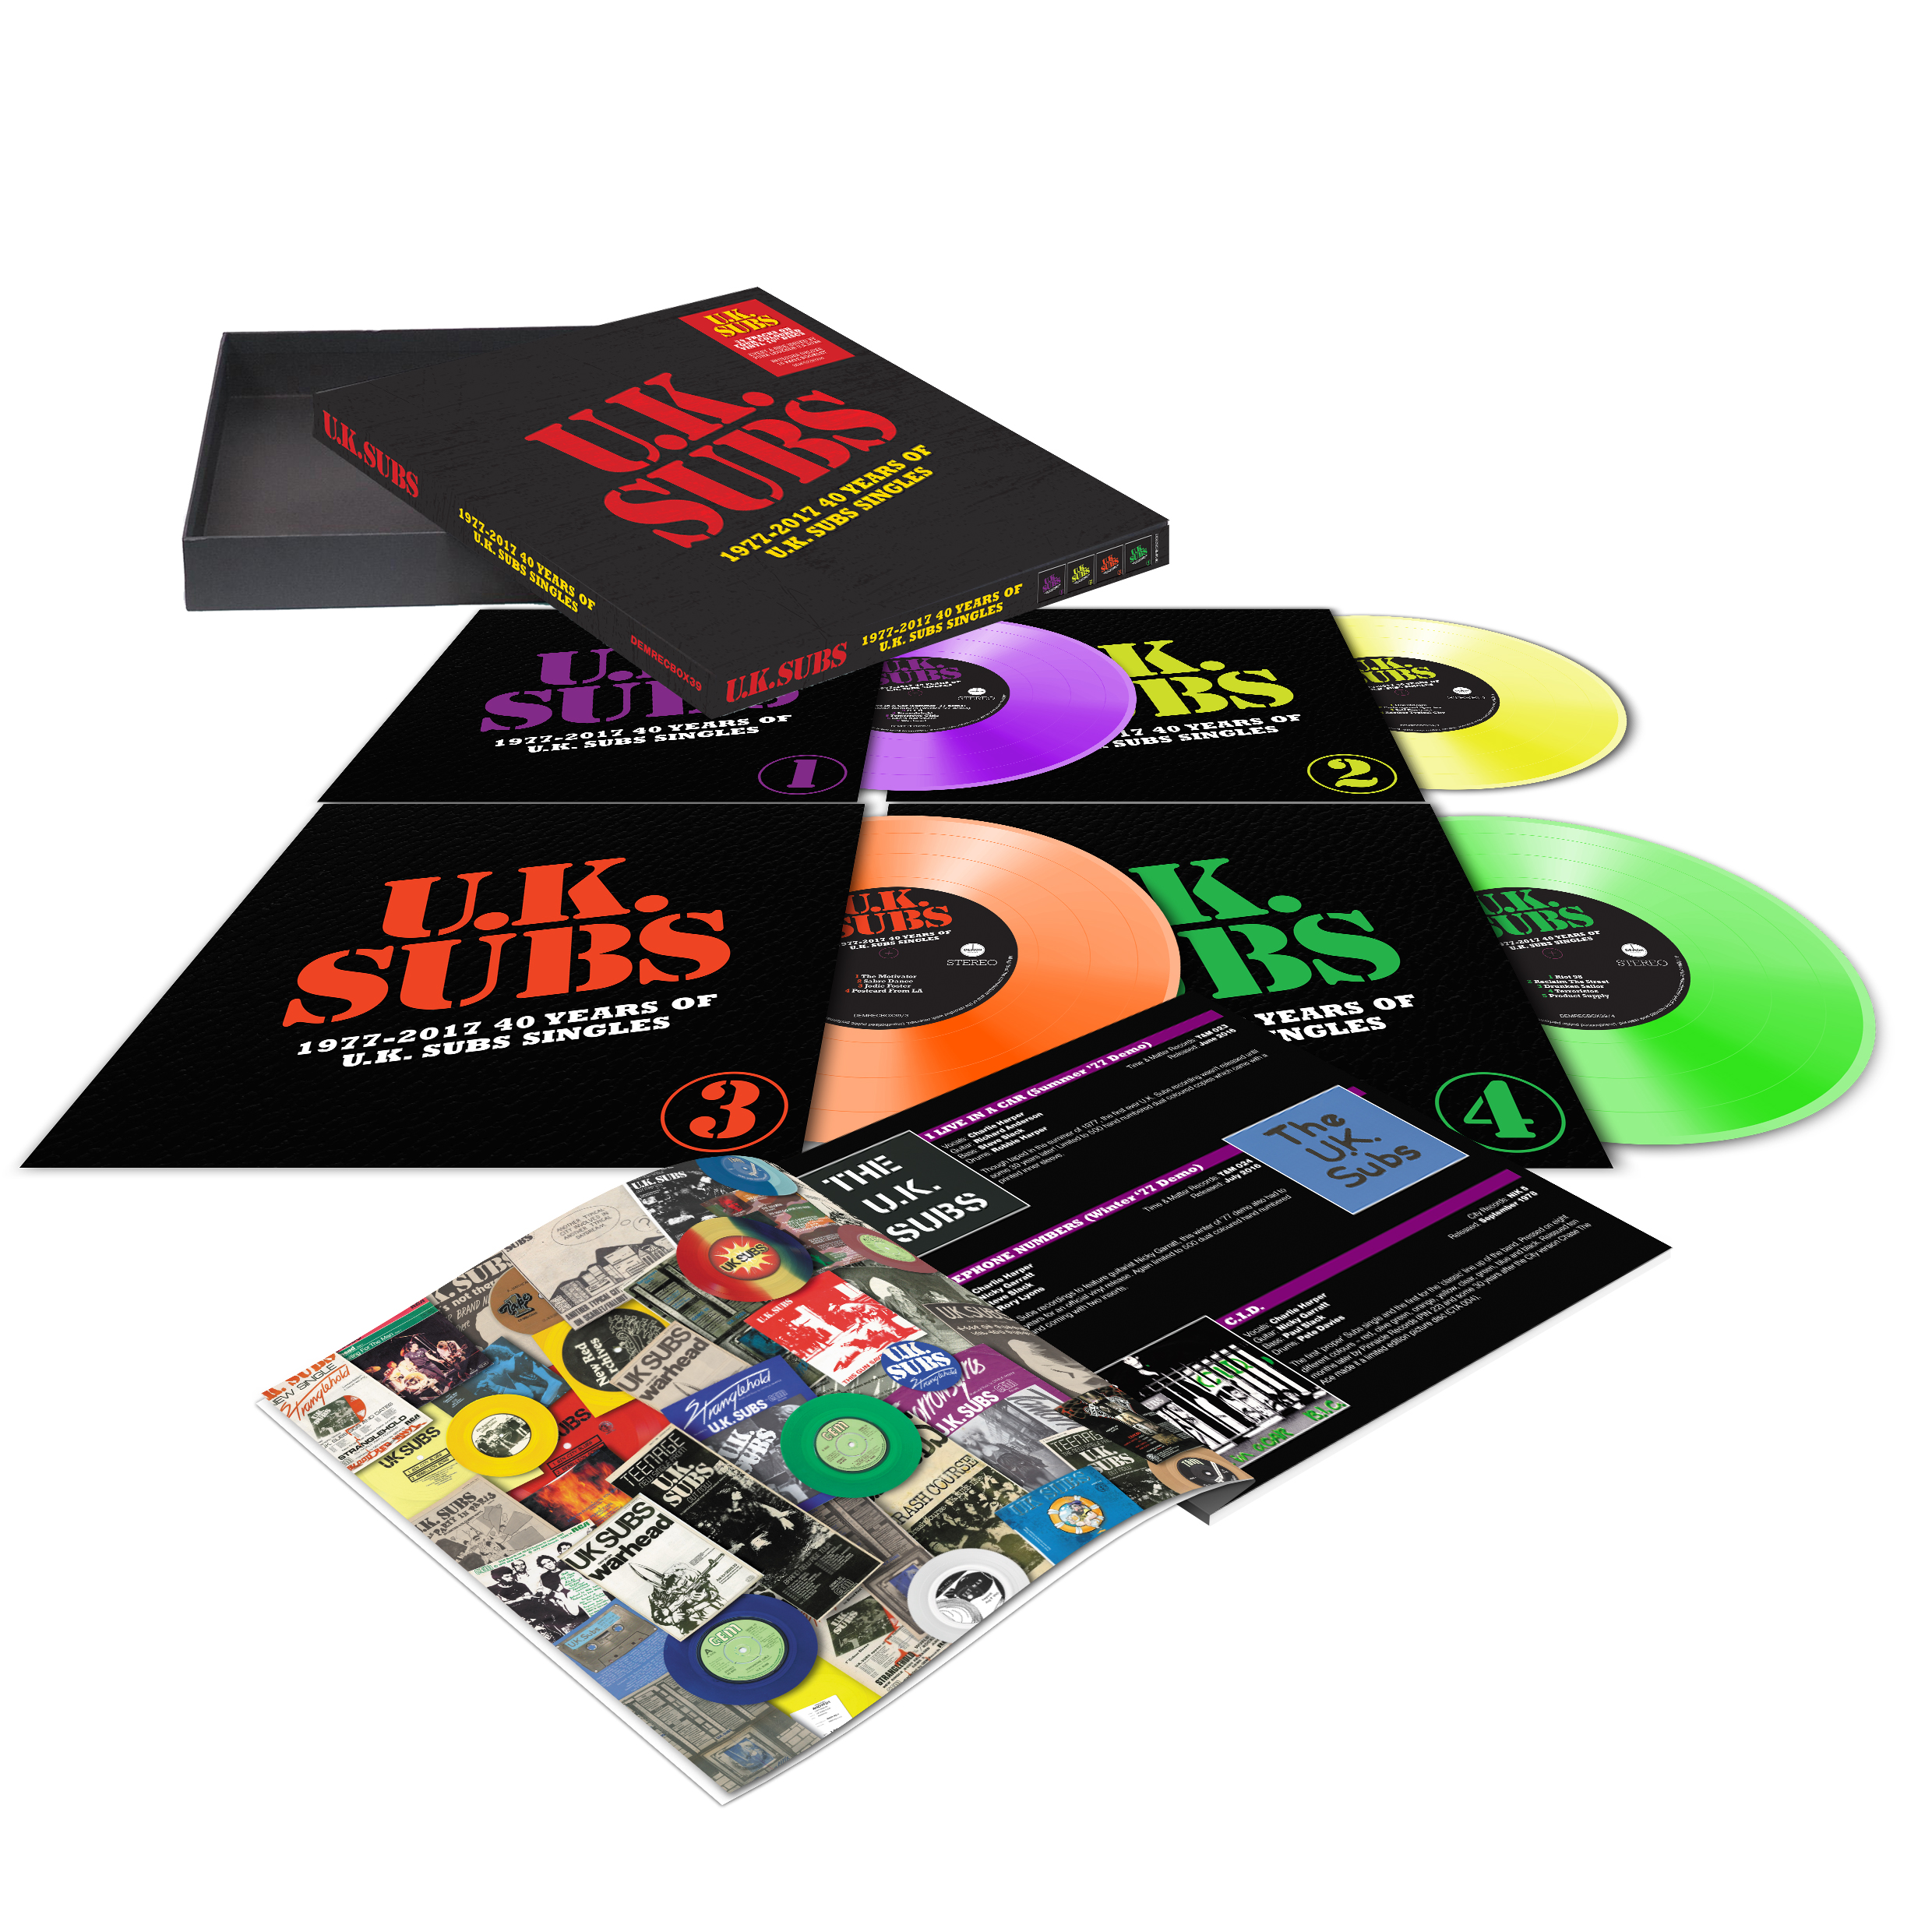 UK Subs 40 Years Box Set Vinyl